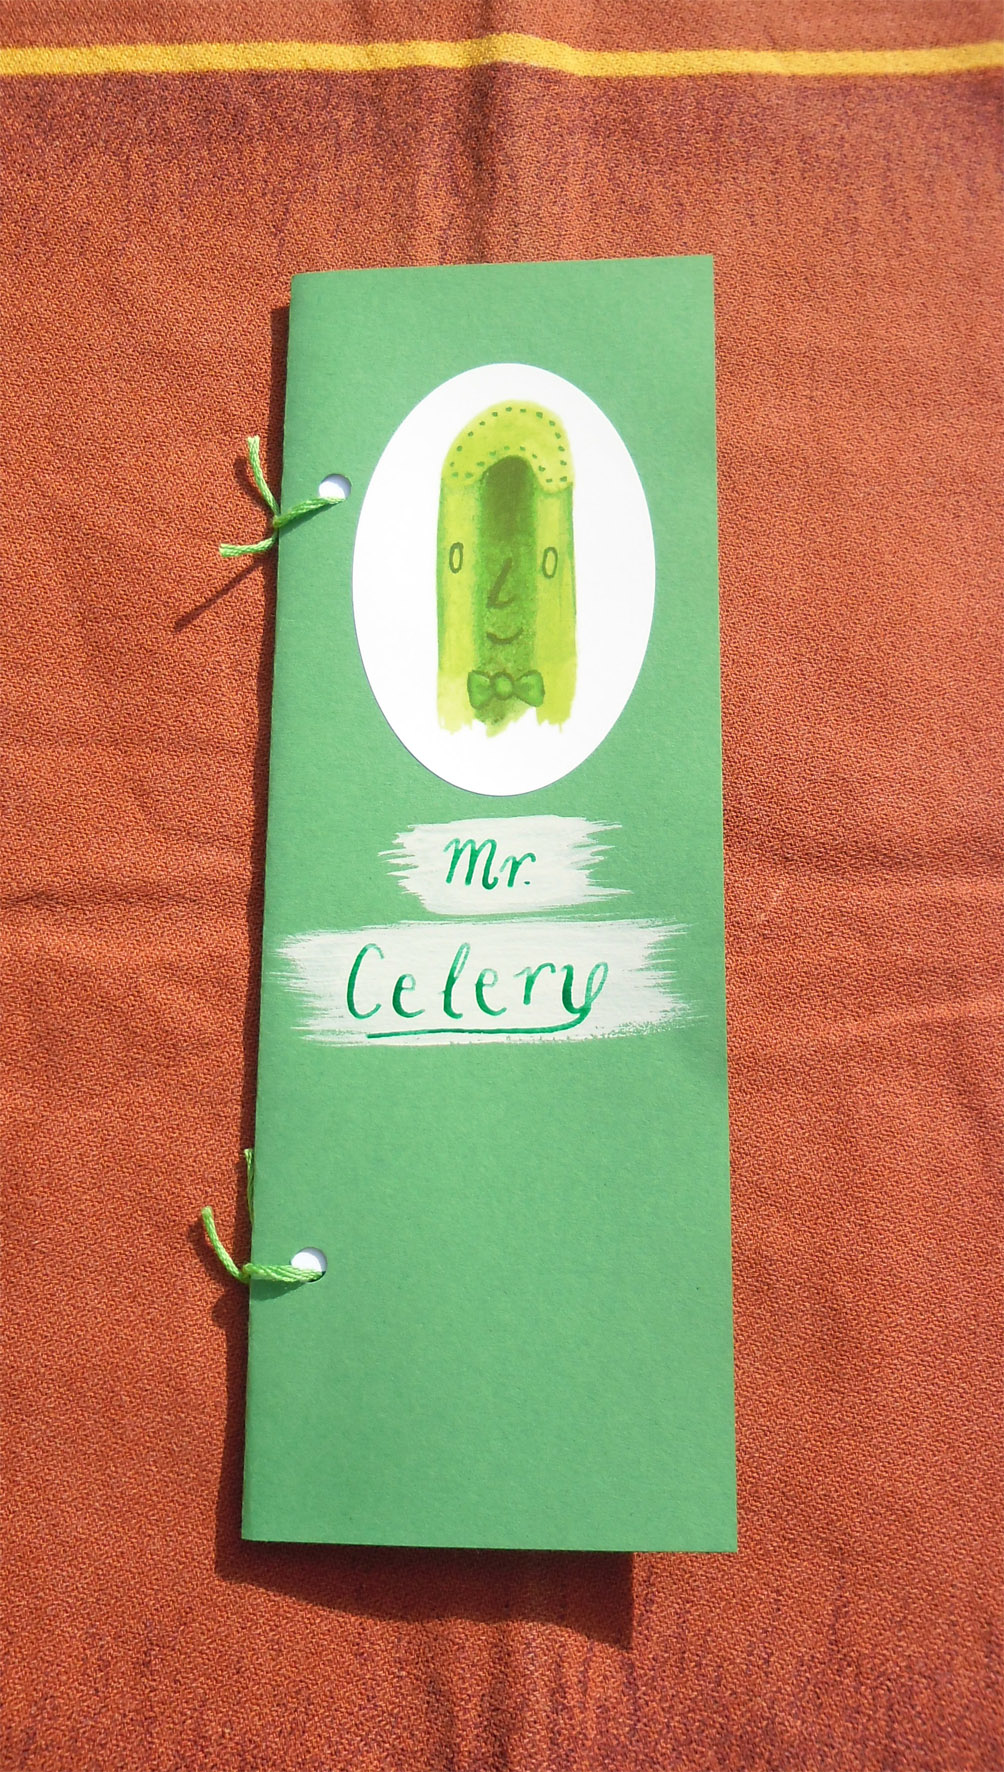 mr-celery-ext.jpg